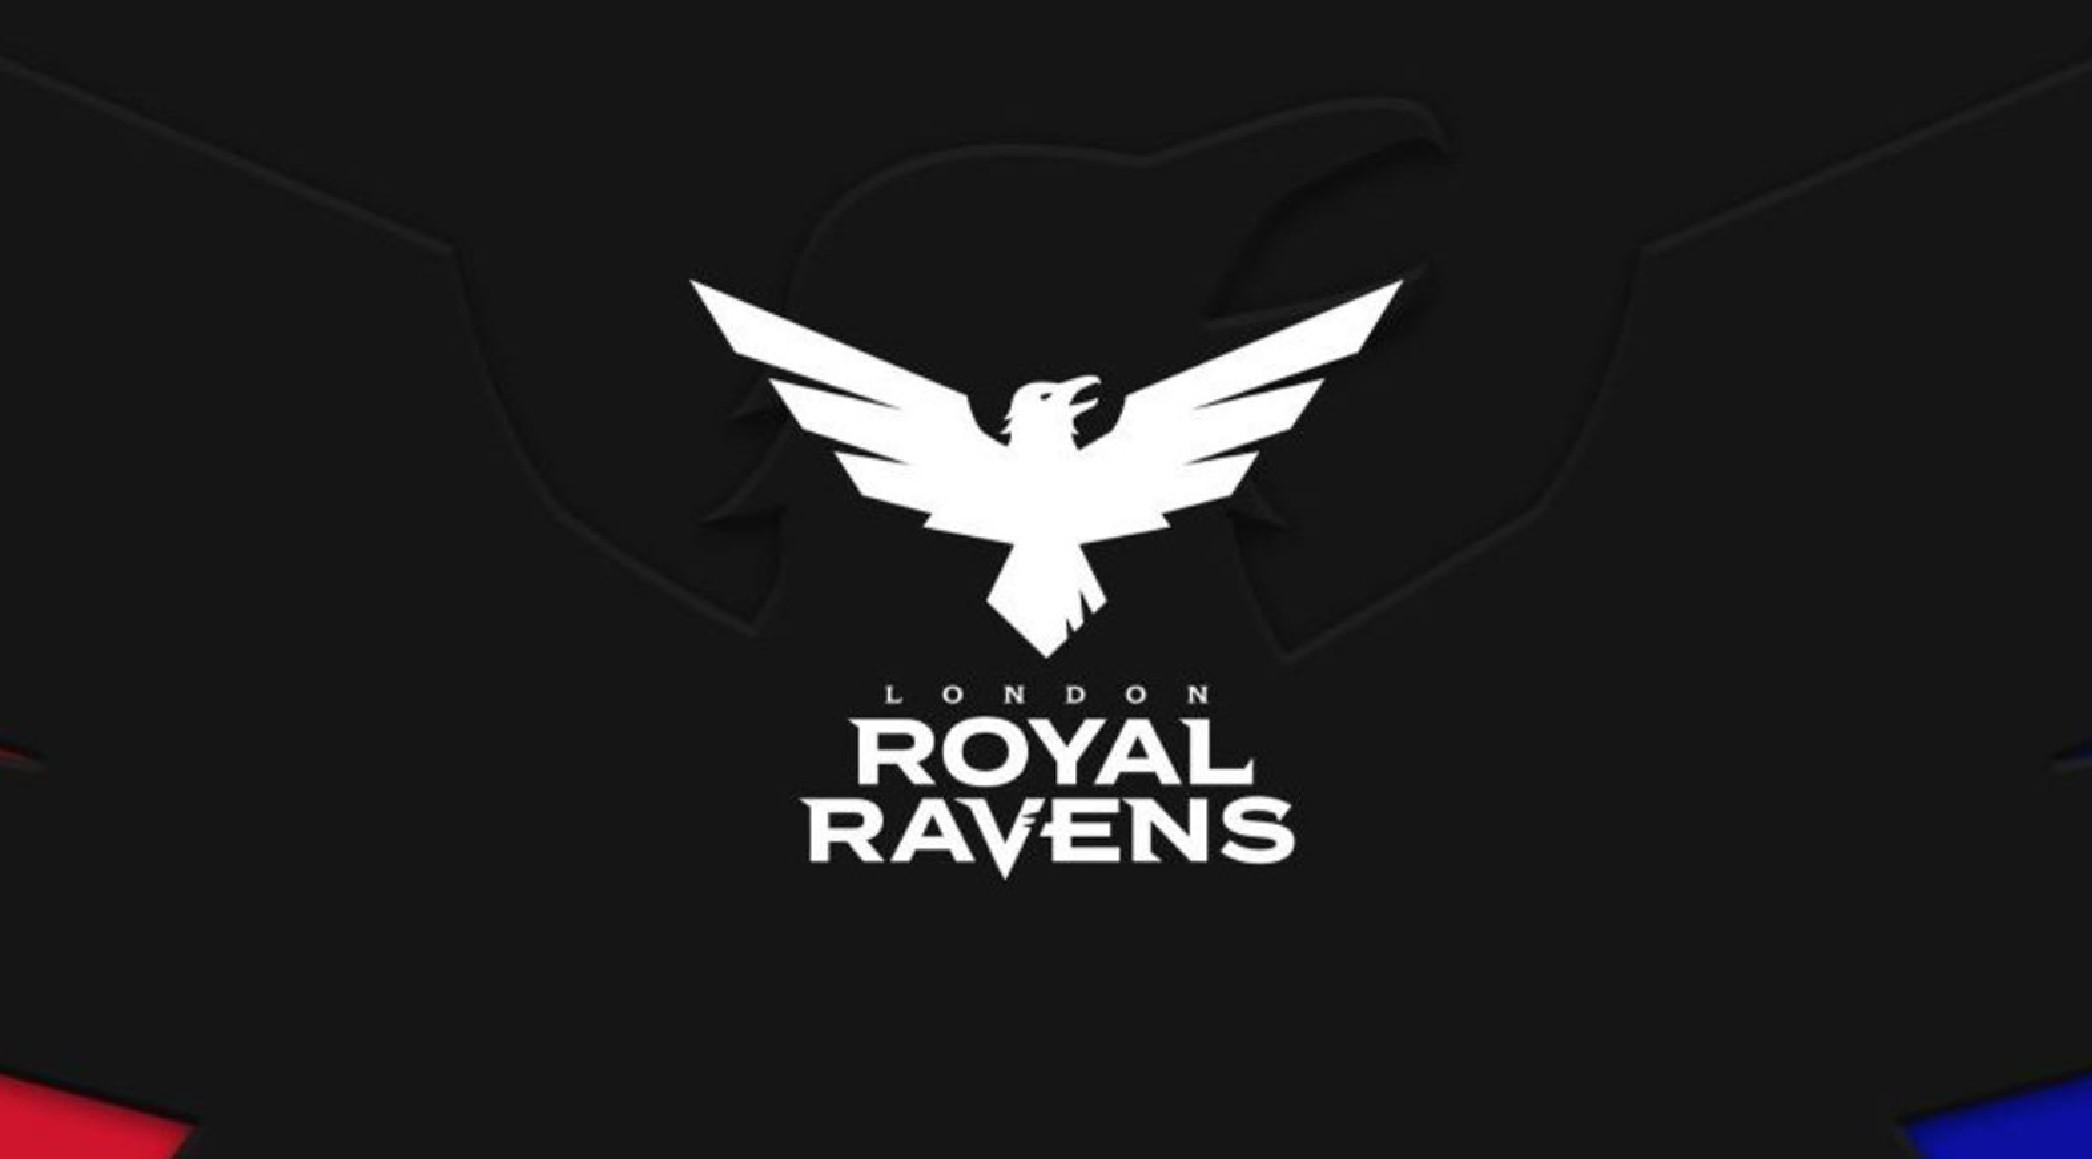 London Royal Ravens logo